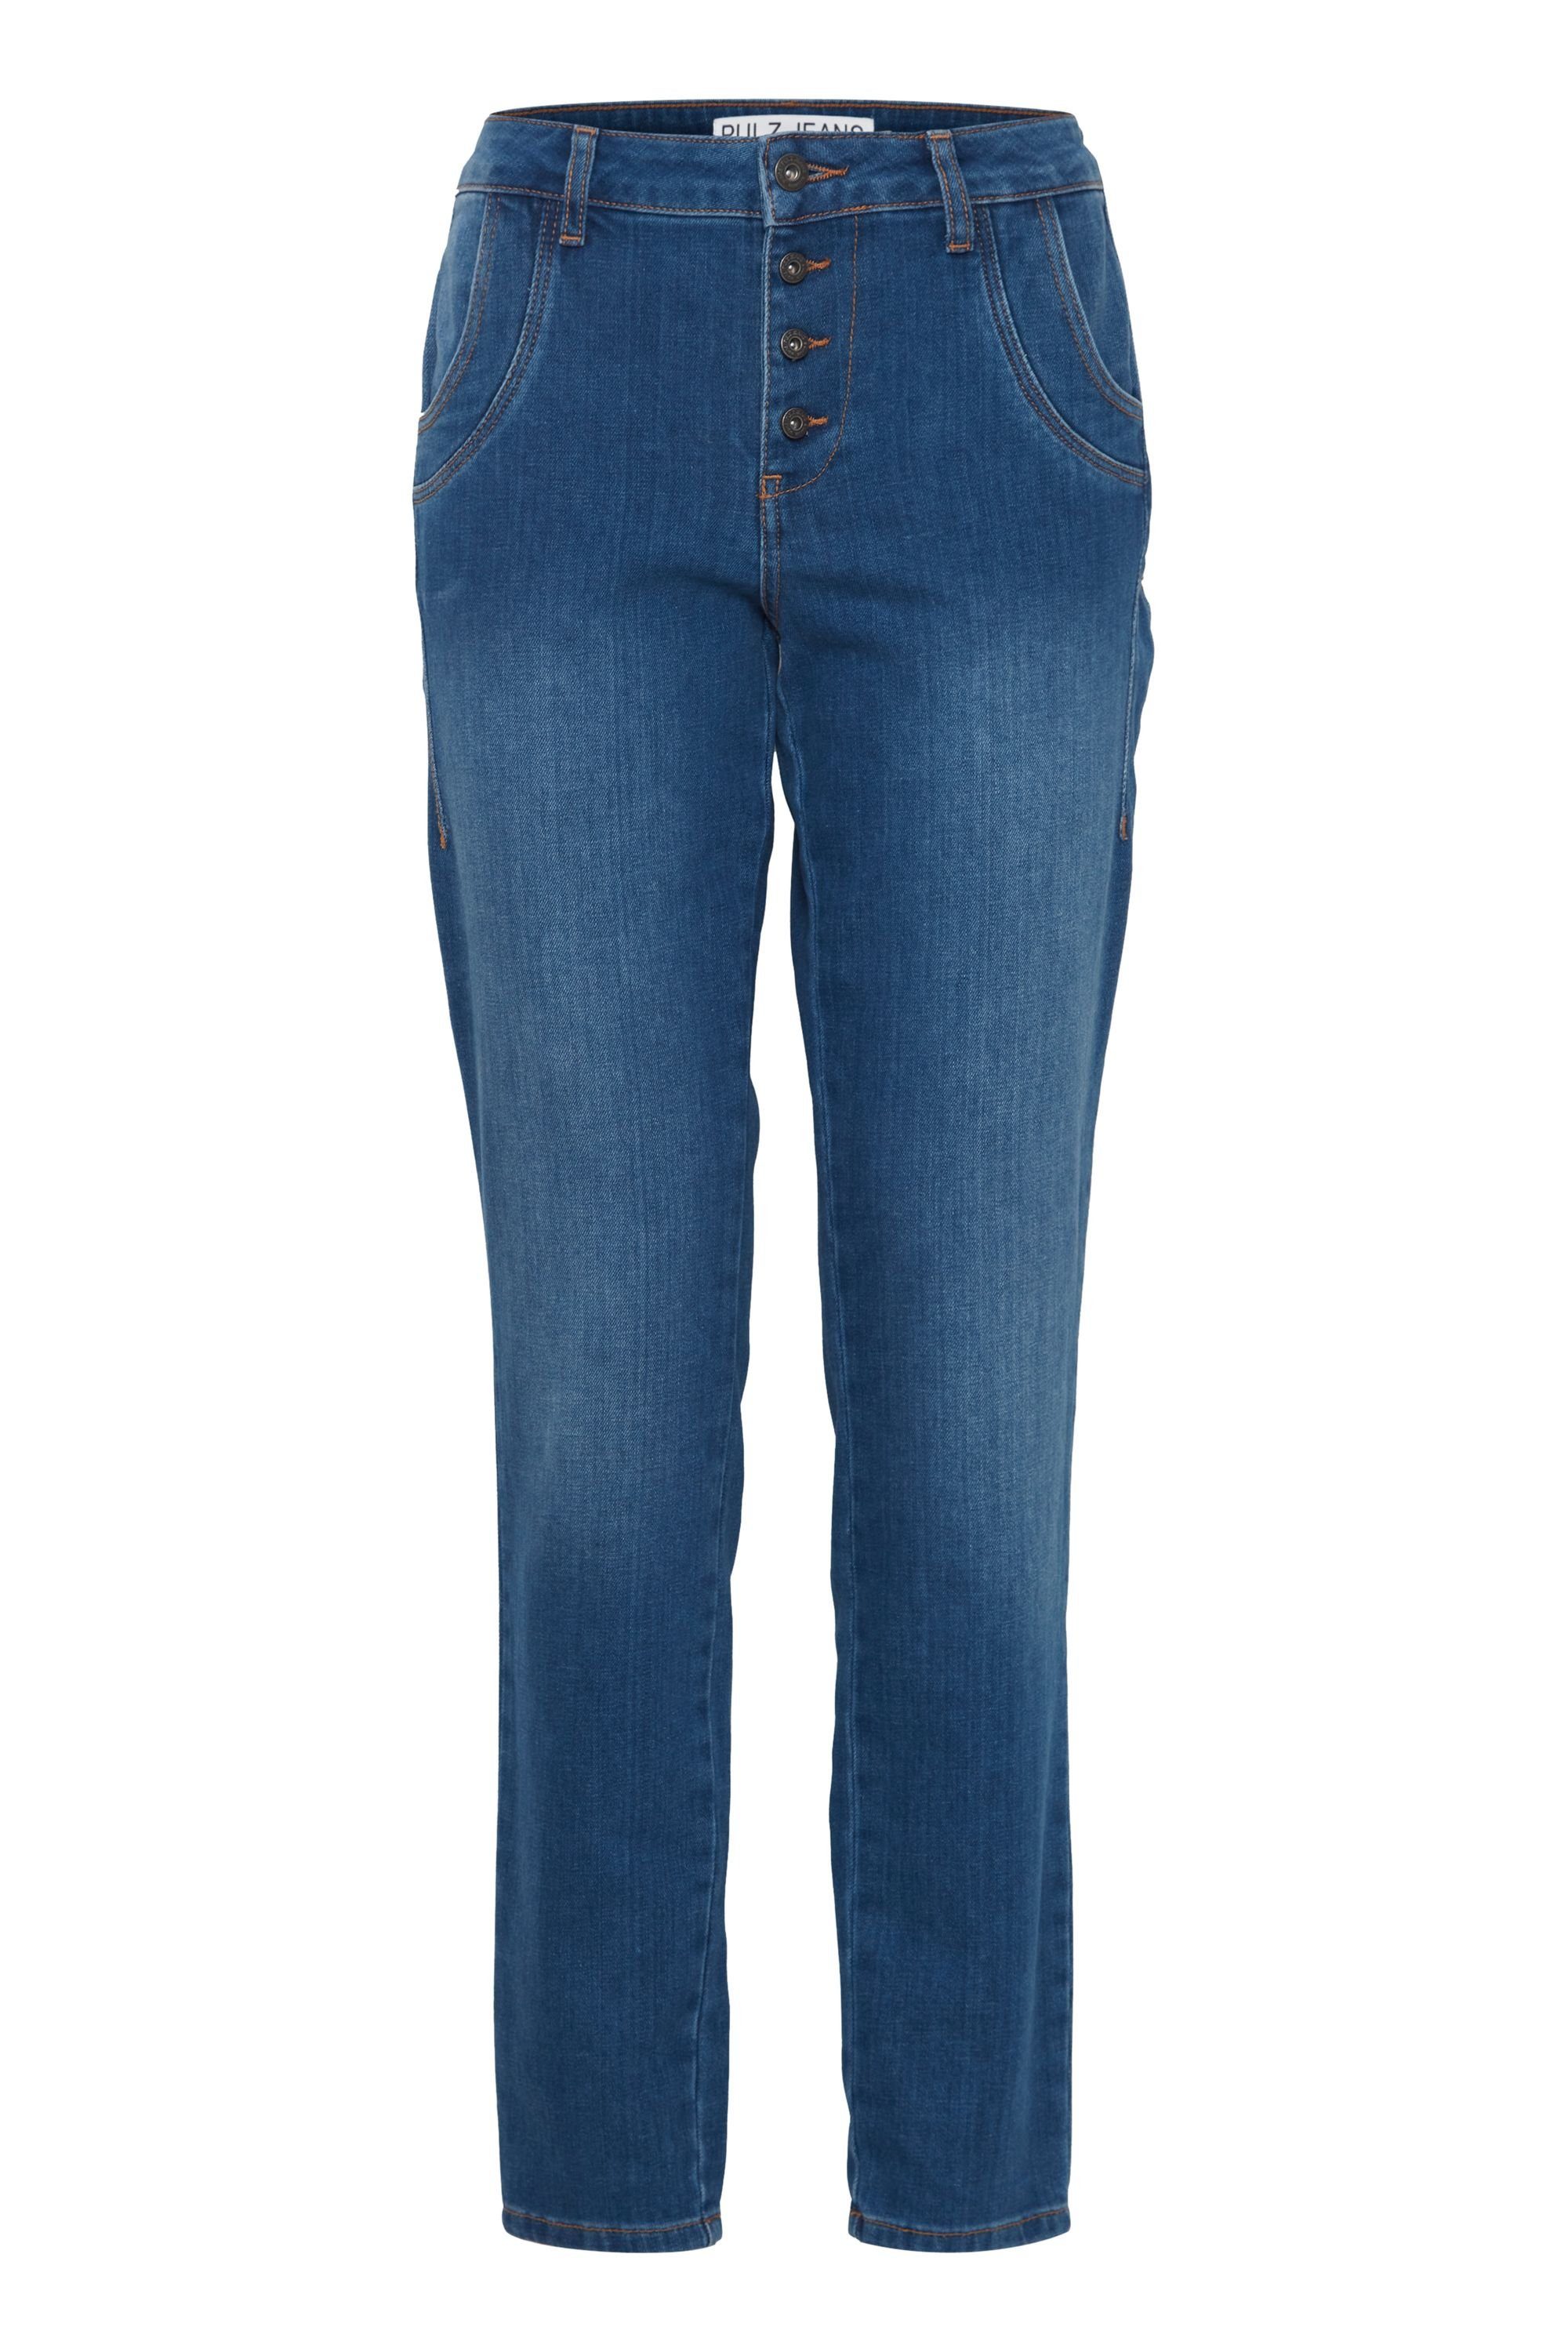 (200005) 5-Pocket-Jeans Jeans blue denim Leg Pulz Medium Jeans Skinny PZMELINA Loose